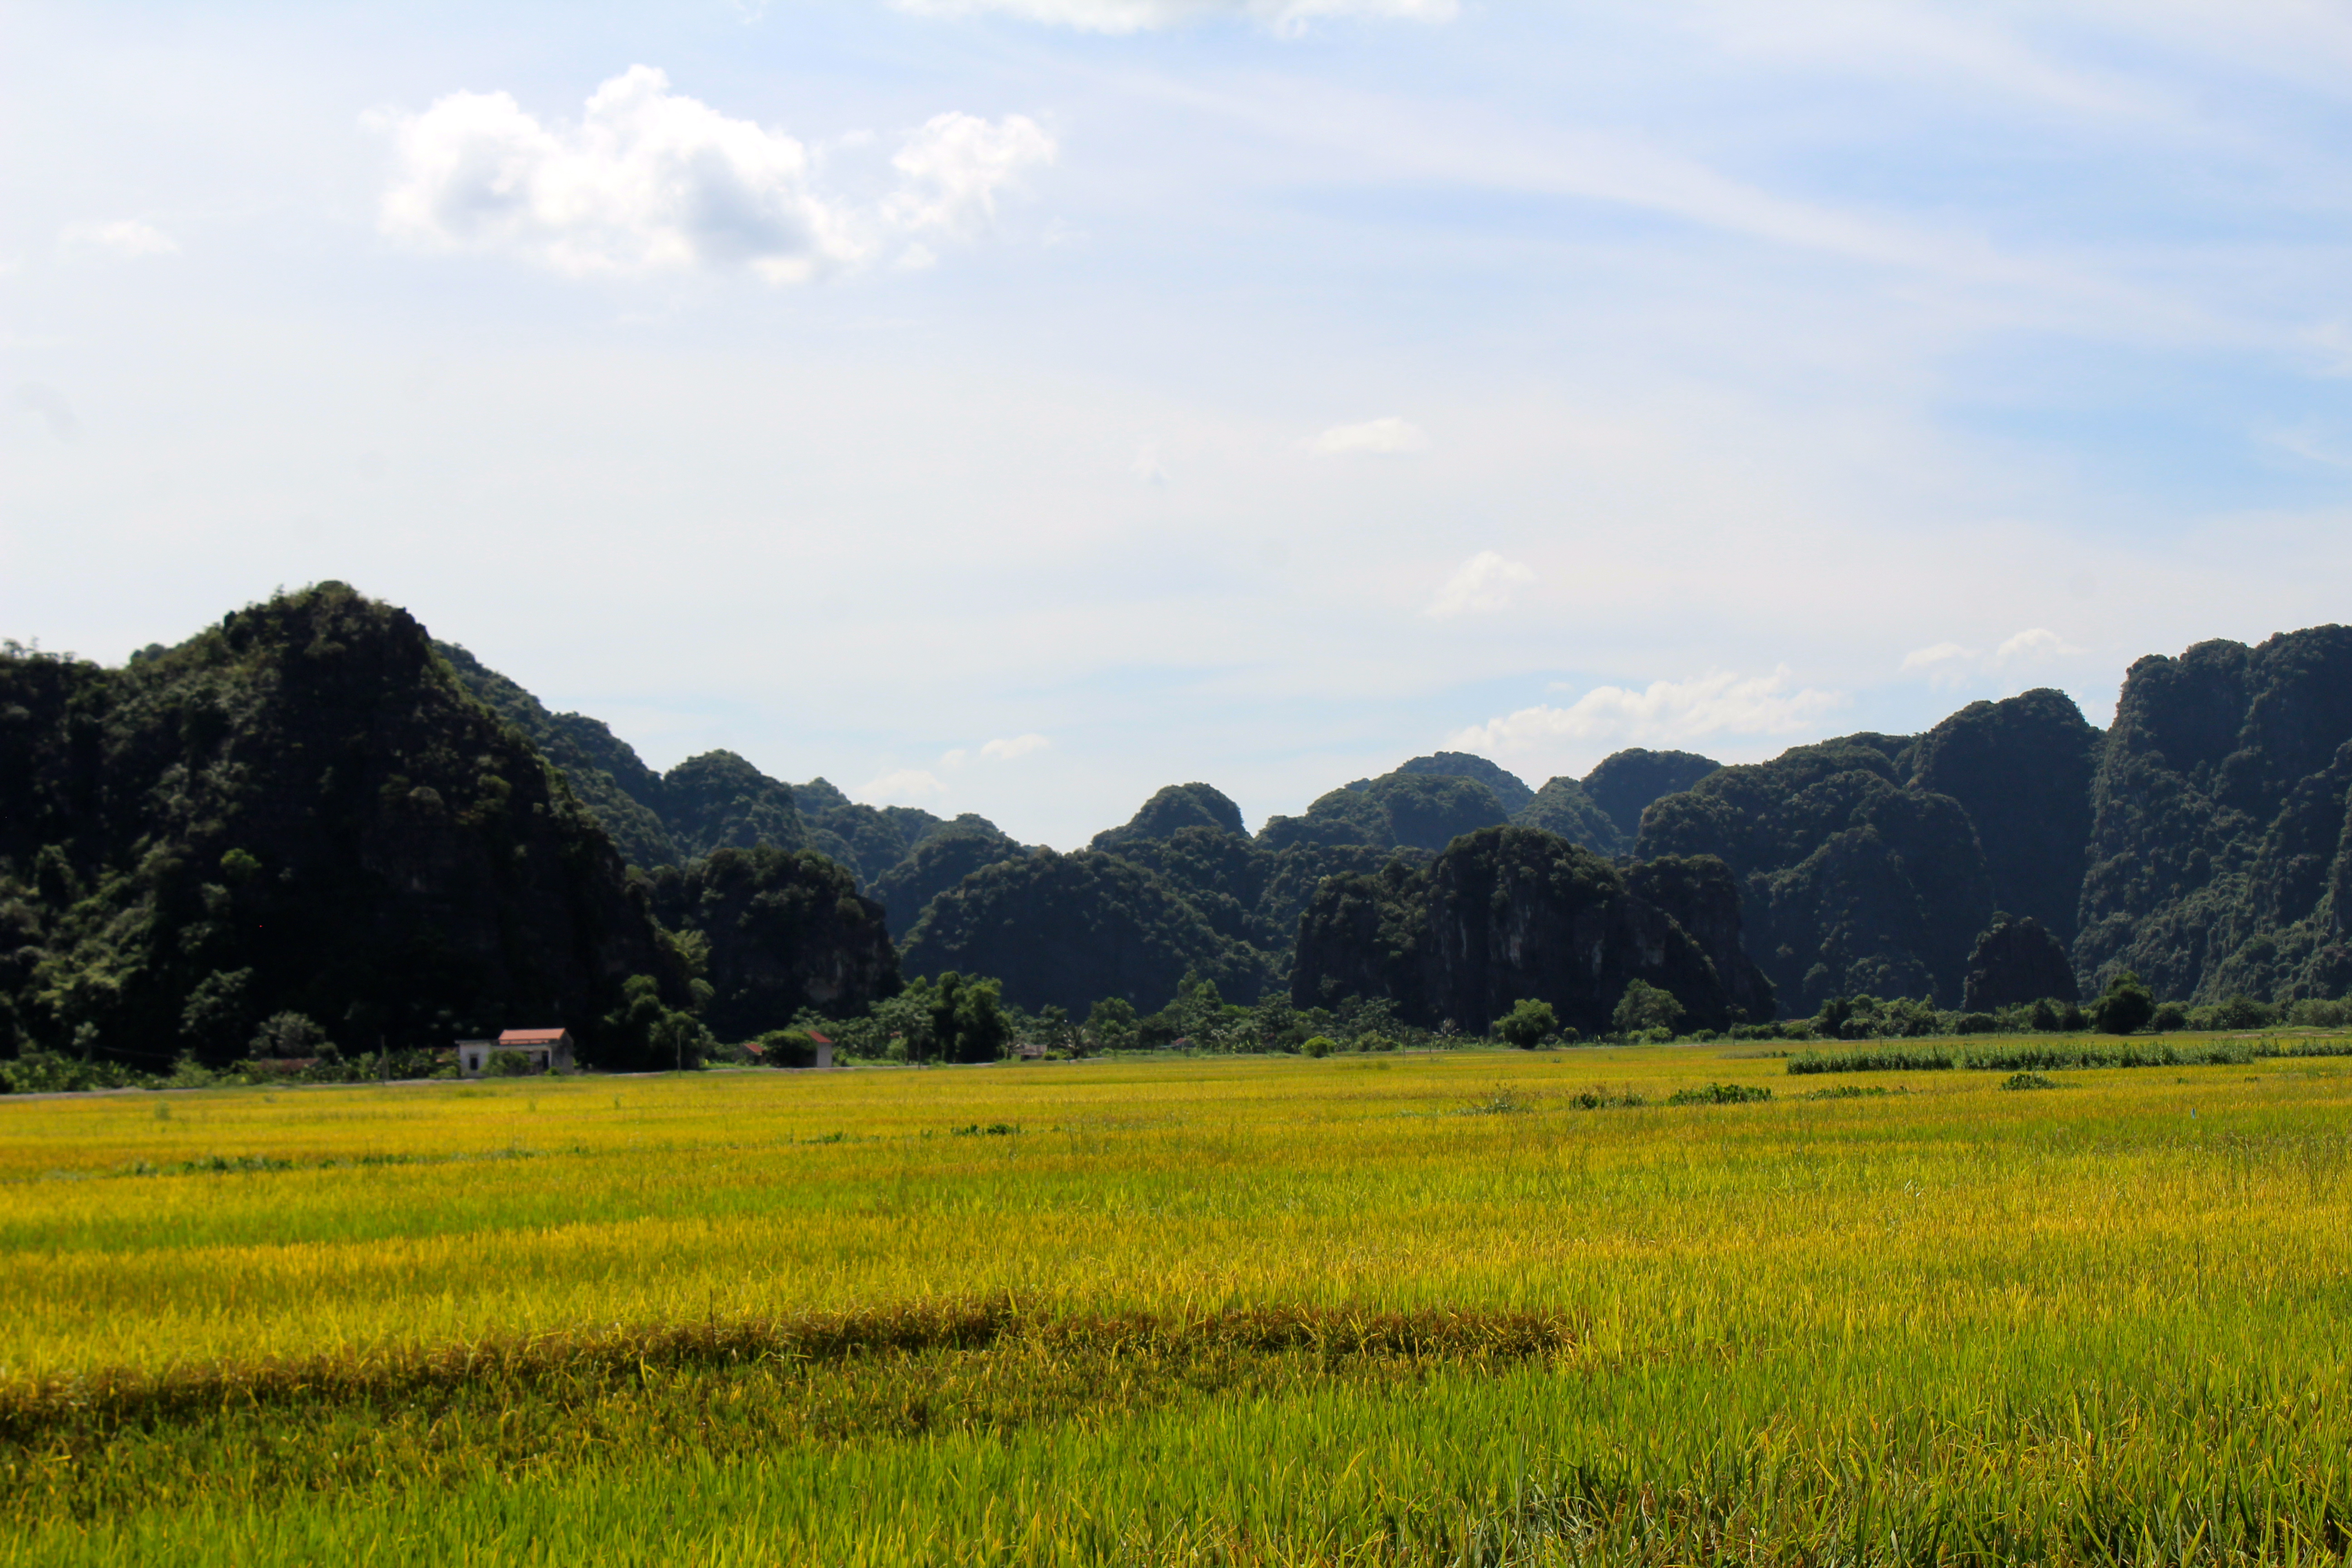 Stunning rice fields before harvest